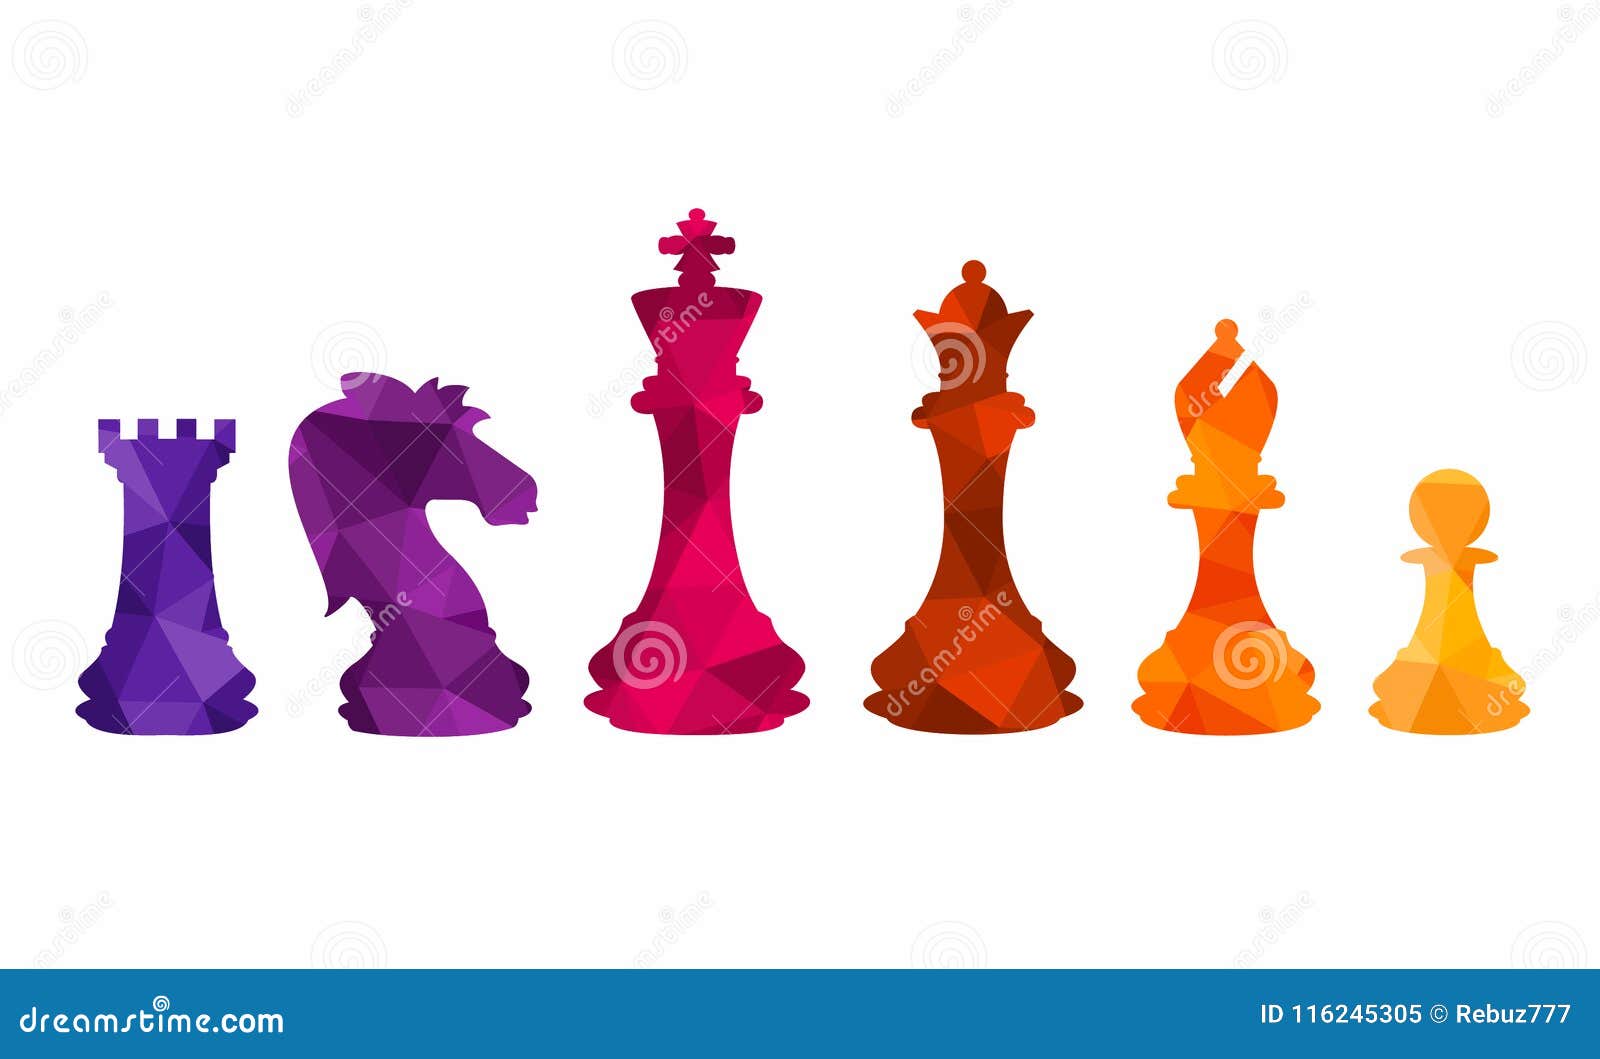 Premium Vector  Chess pieces vector 4